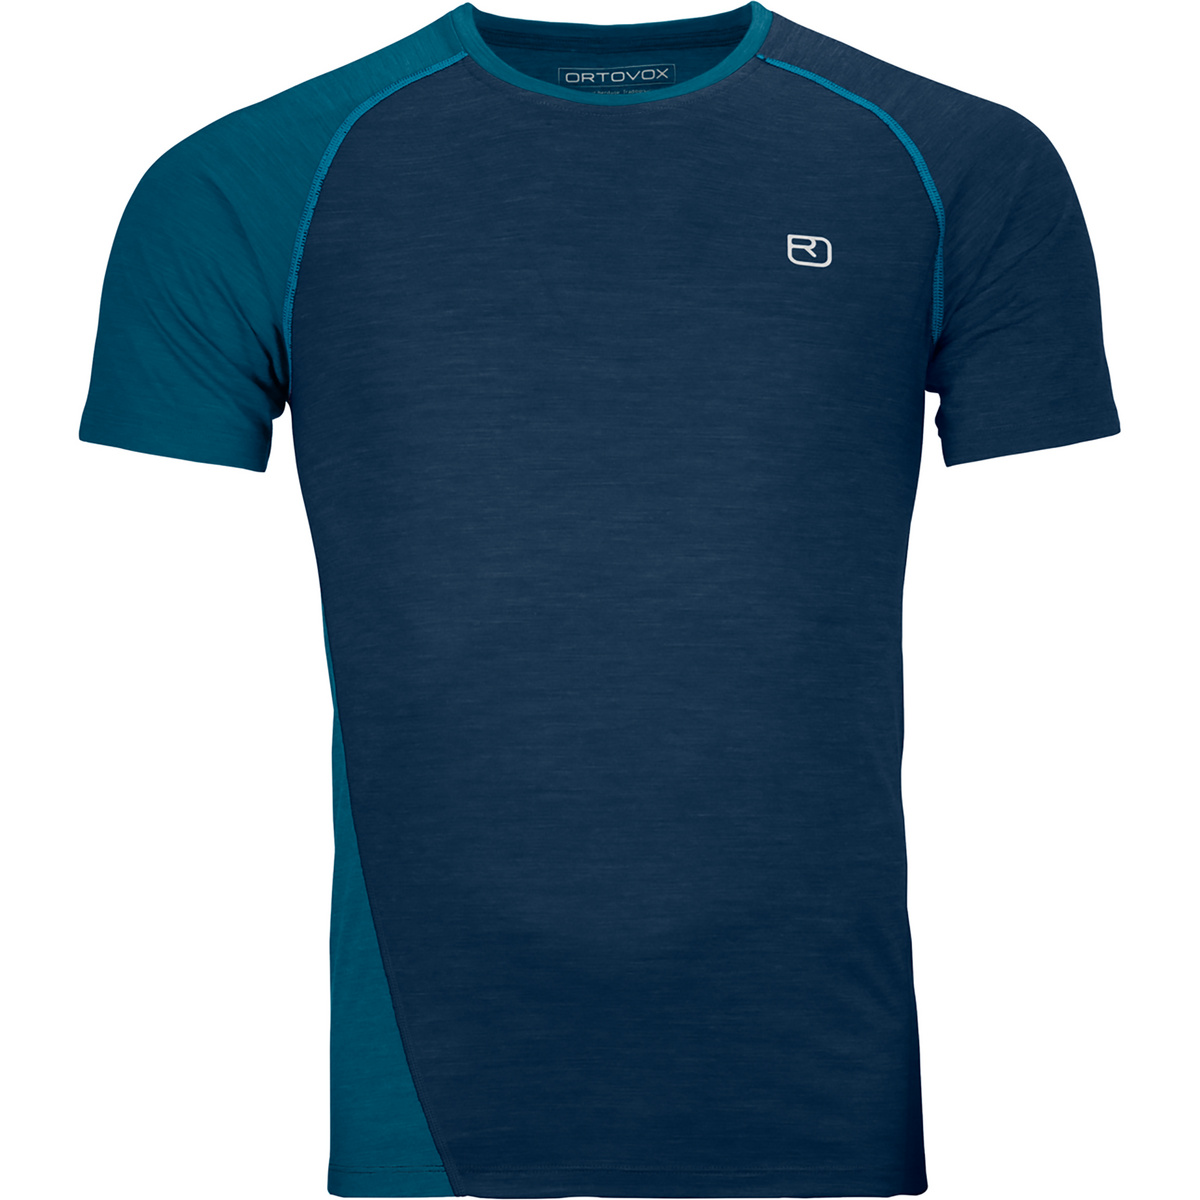 Ortovox Herren 120 Cool Tec Fast Upward T-Shirt von Ortovox